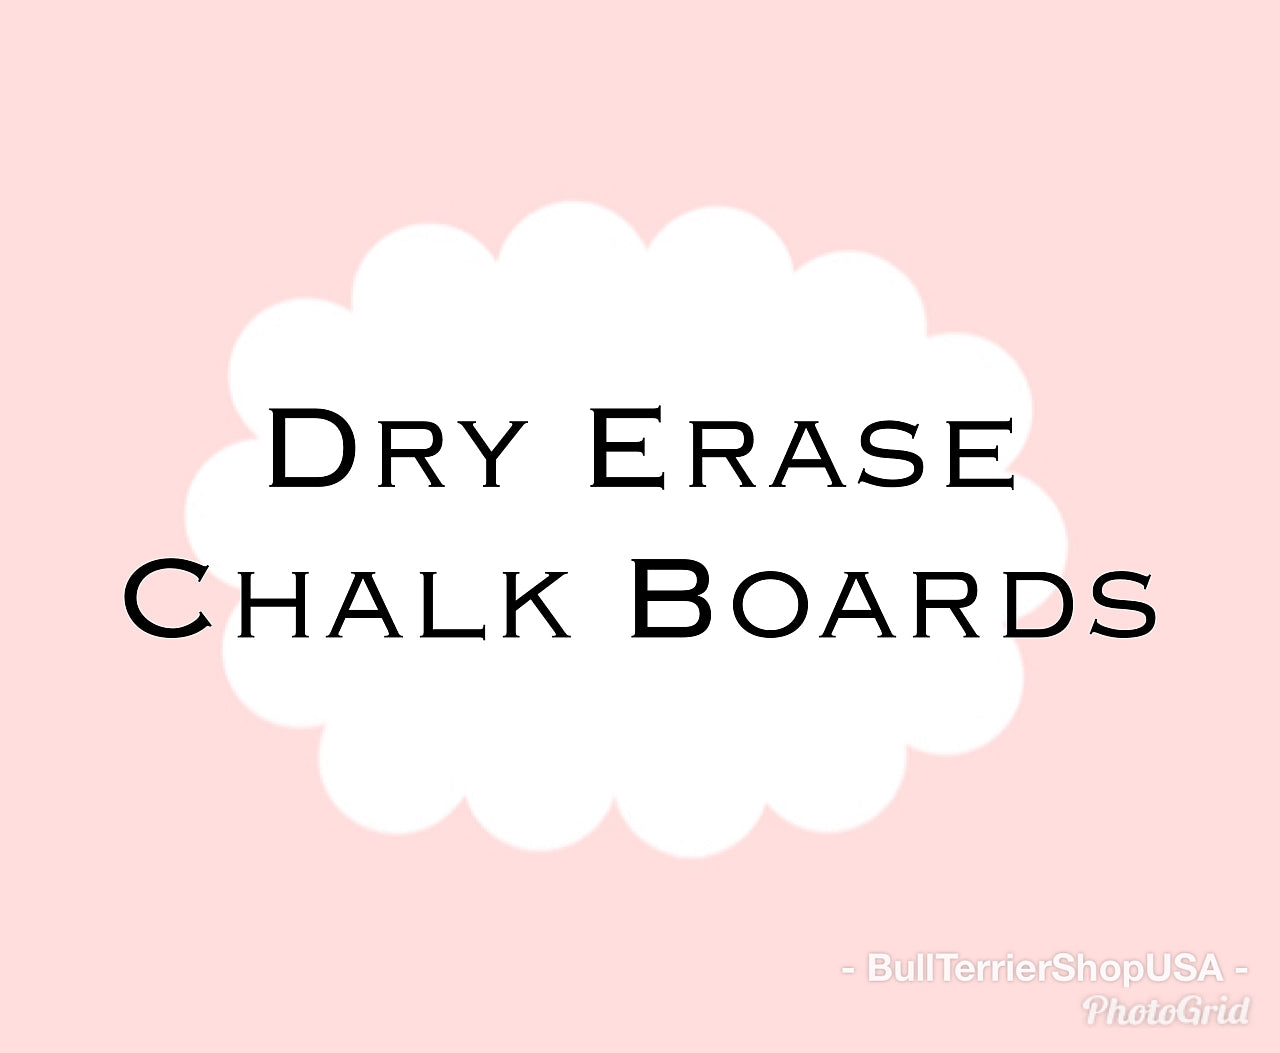 Dry Erase / Chalkboards